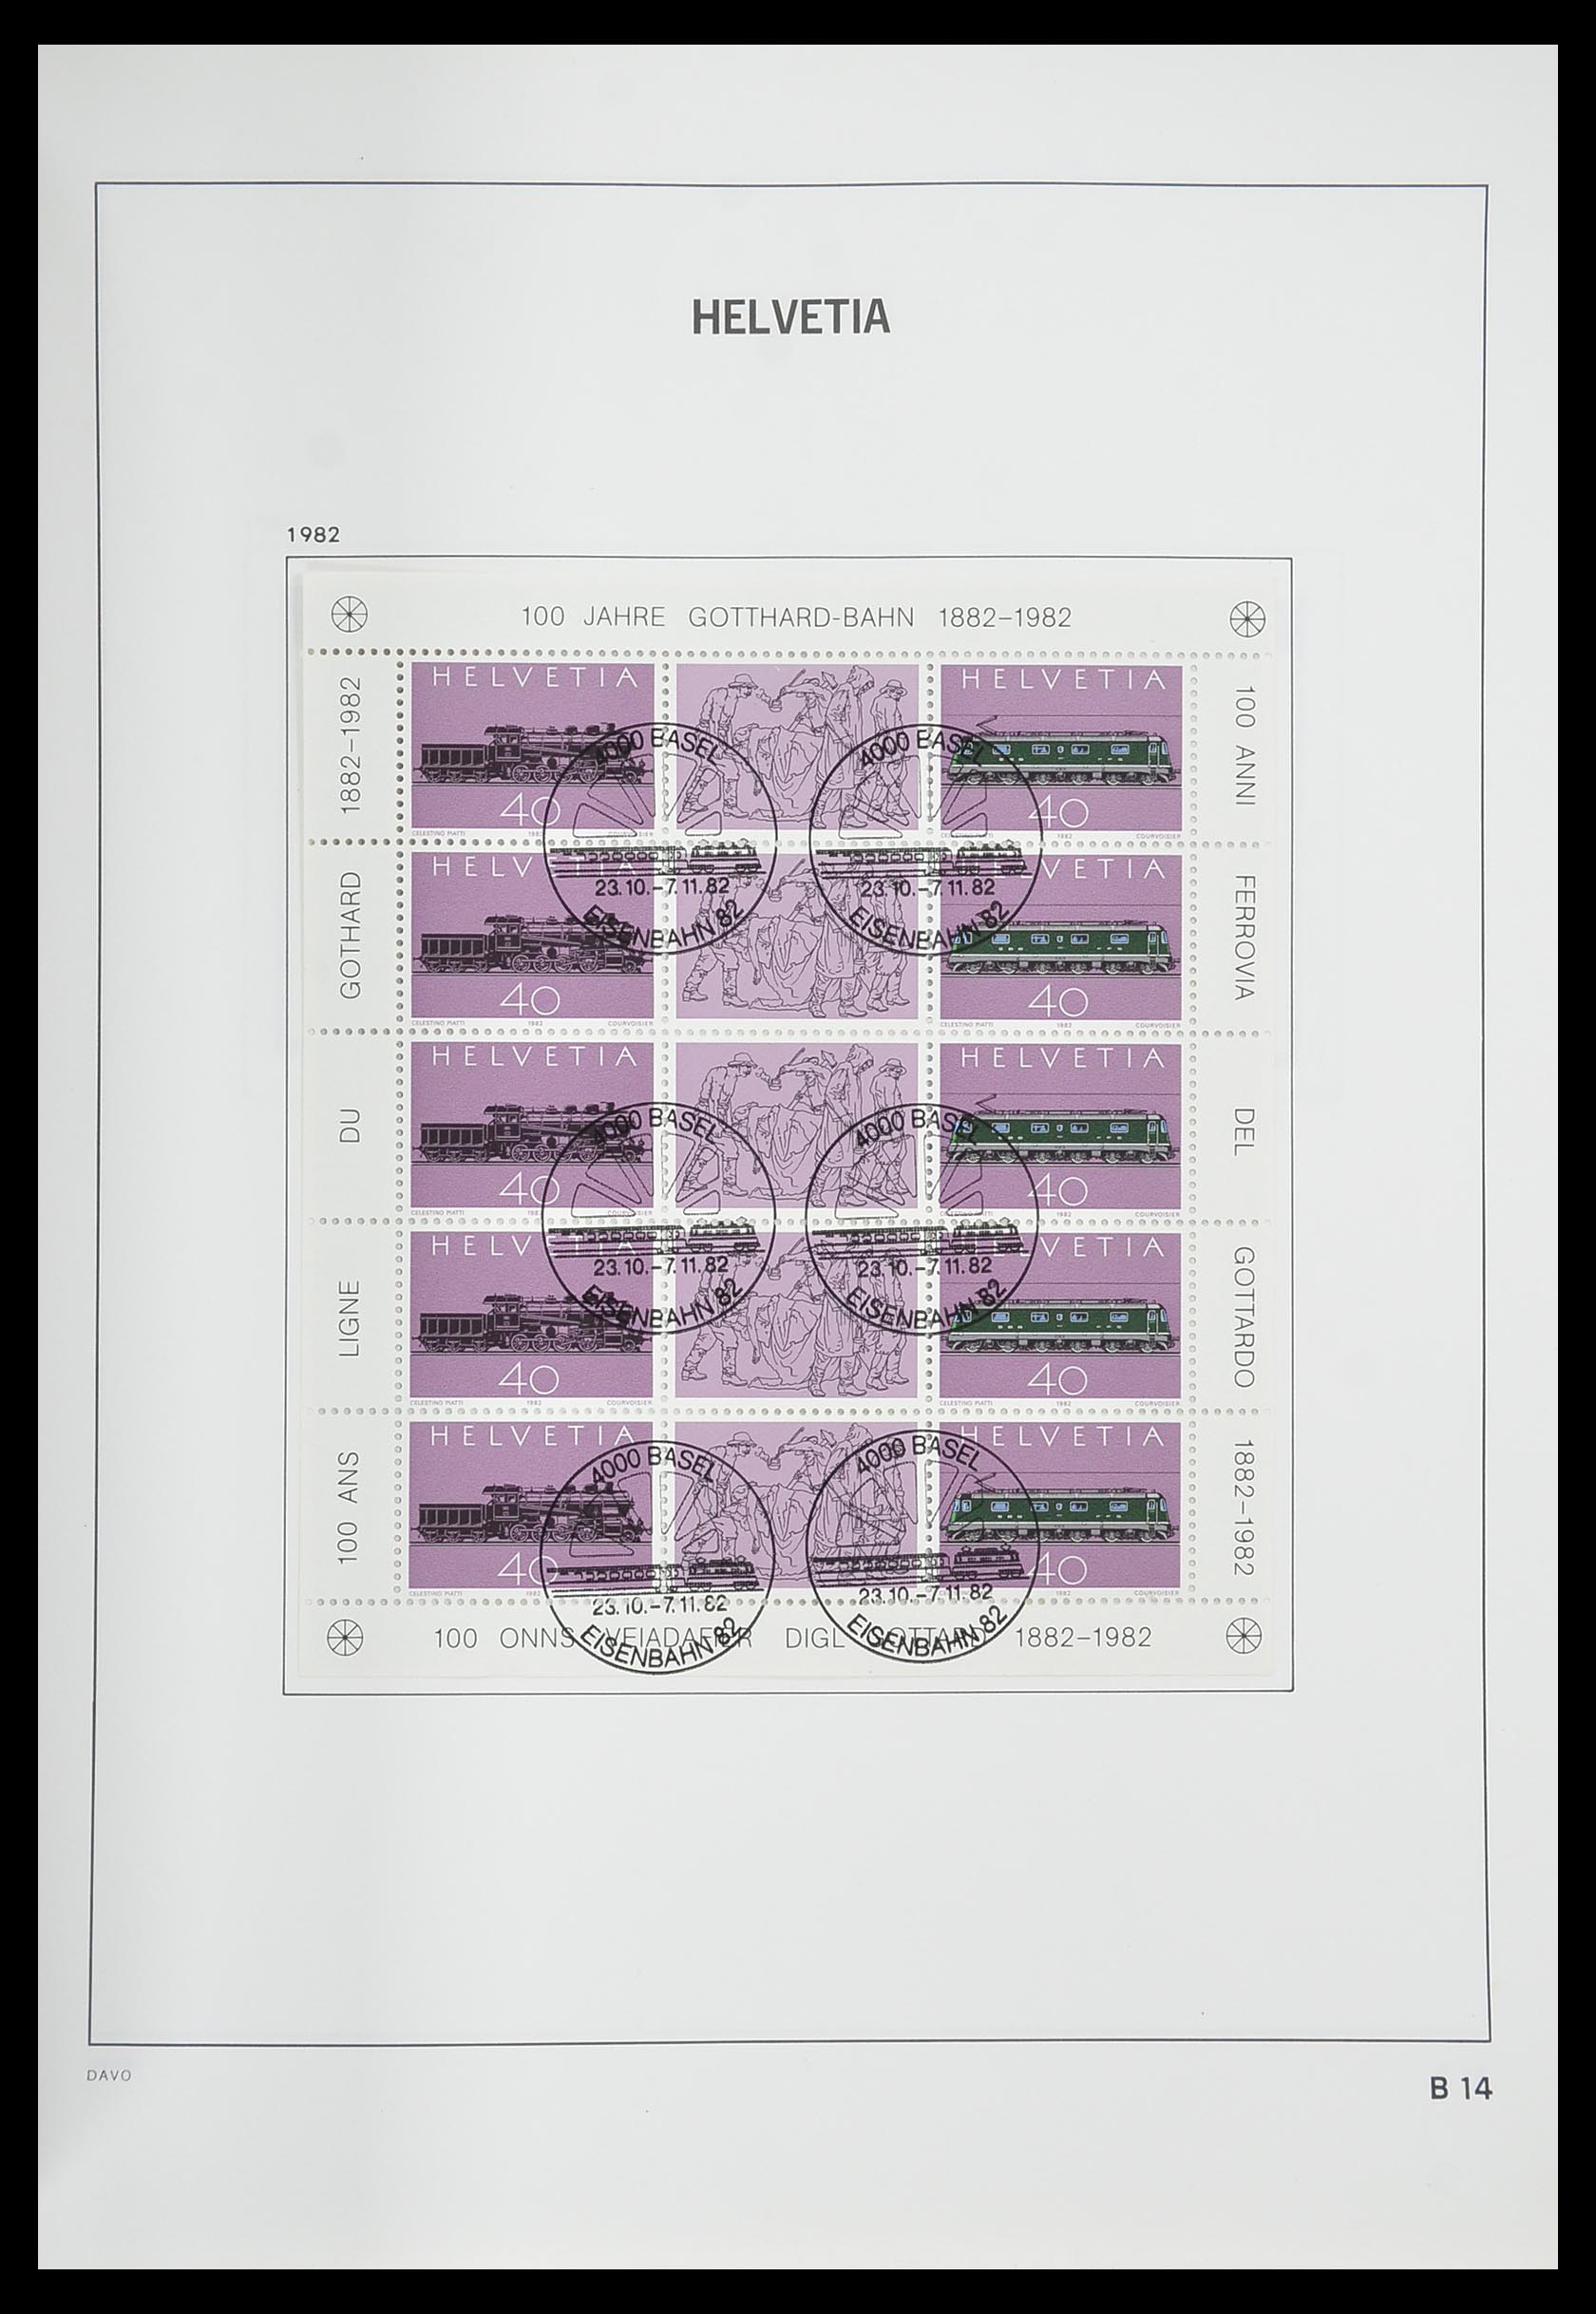 33559 147 - Stamp collection 33559 Switzerland 1850-2000.